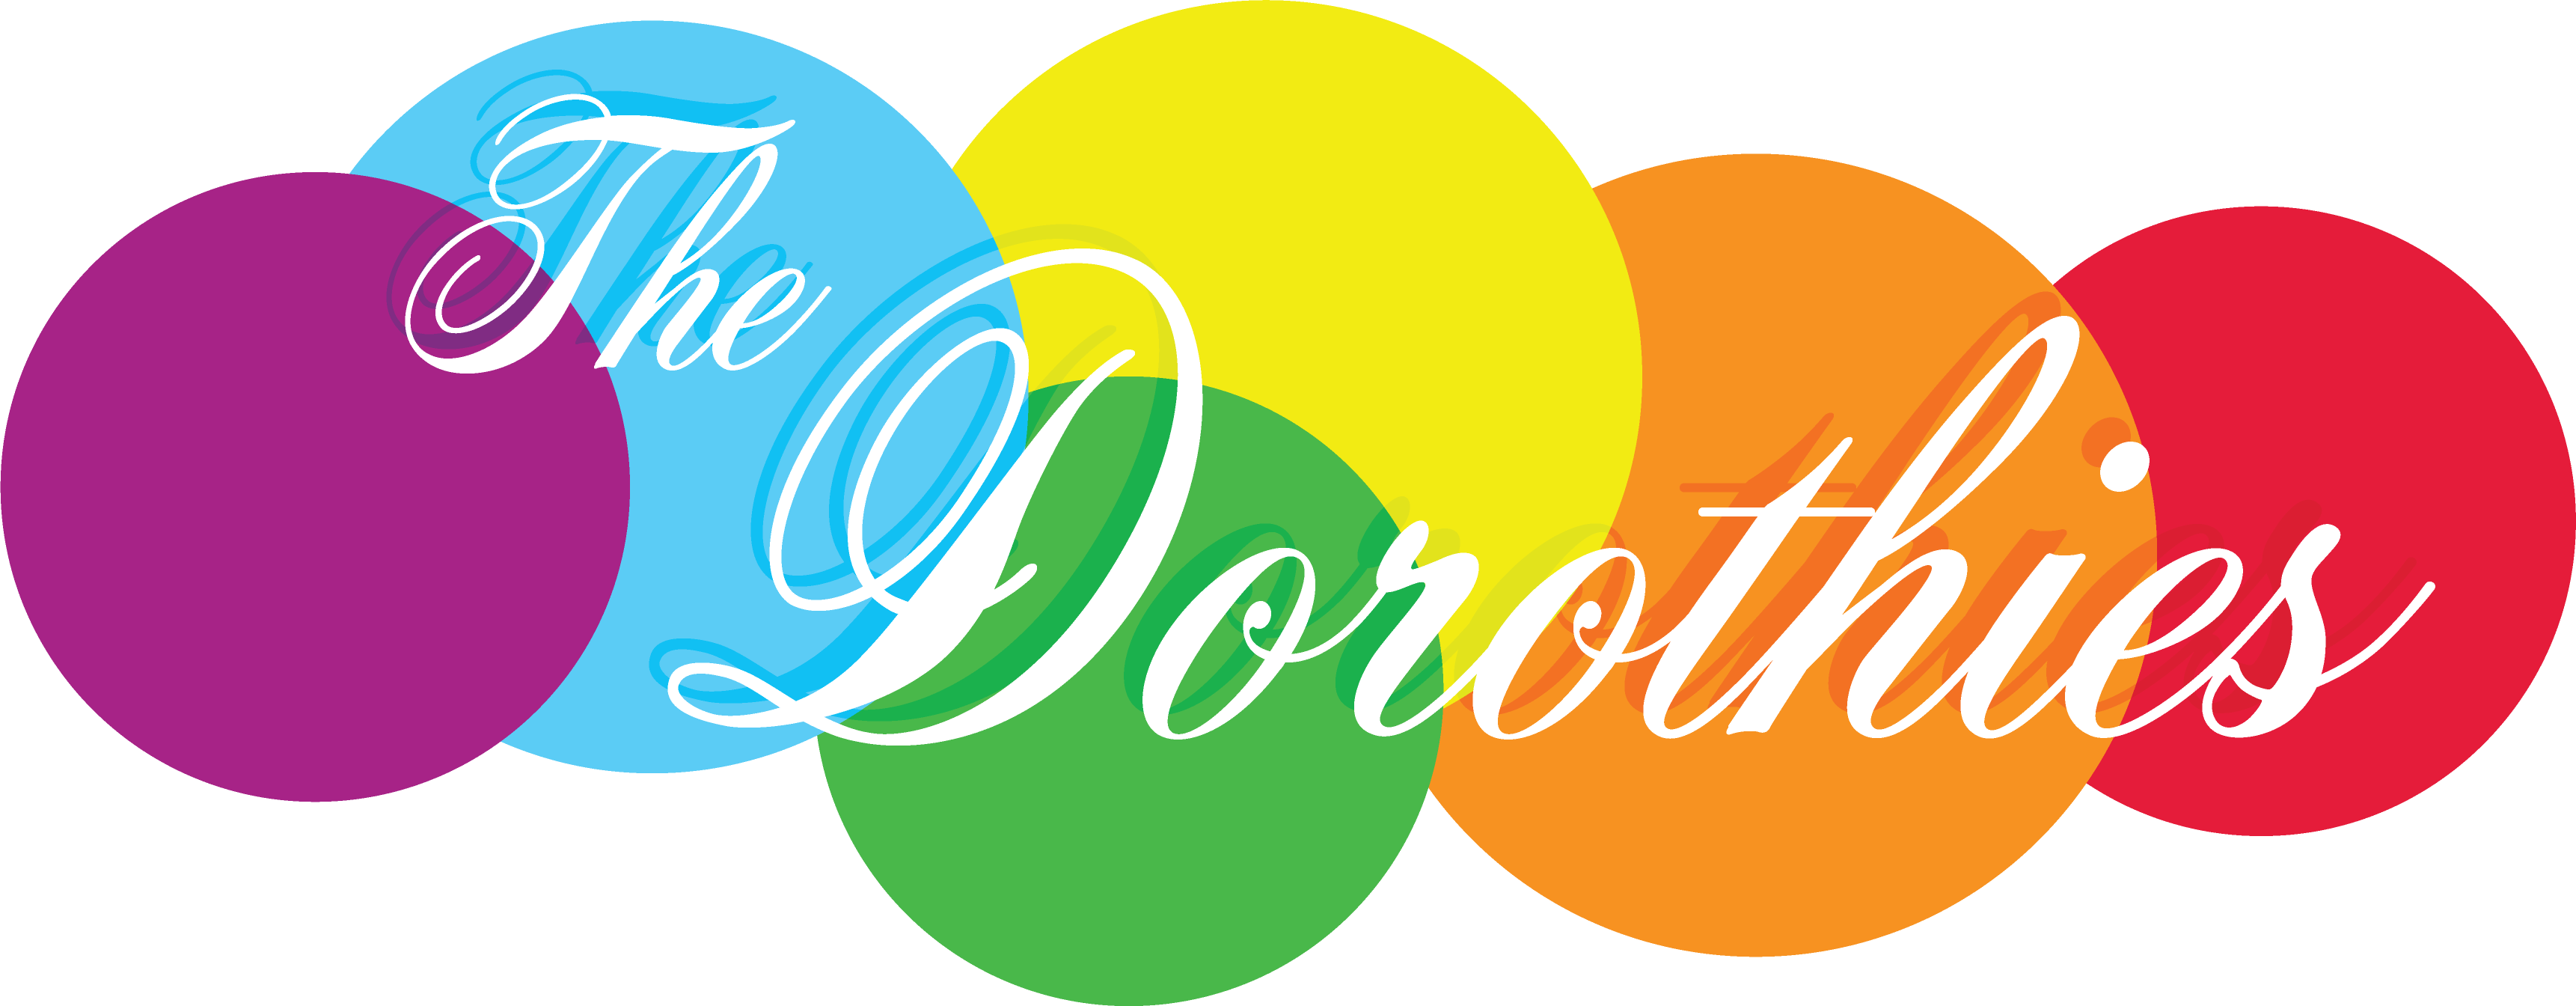 Dorathies Logo